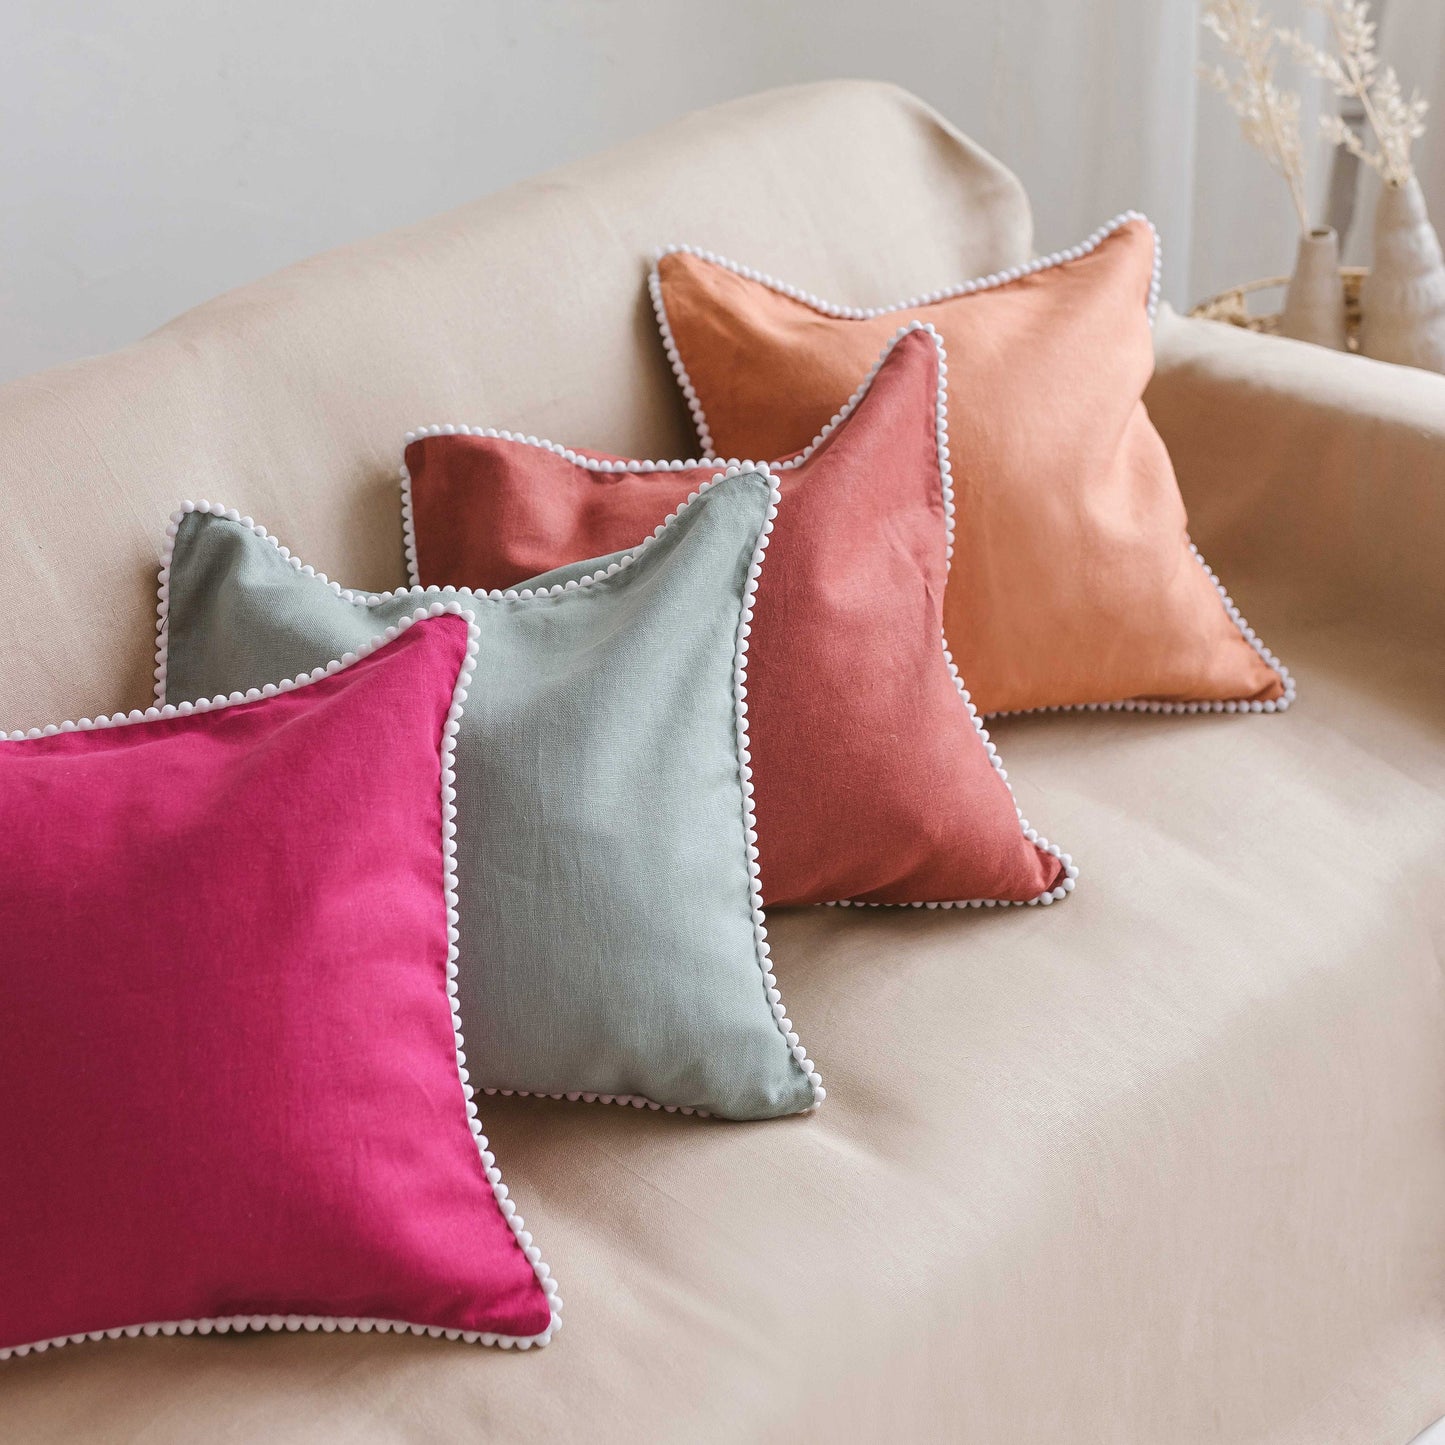 Decorative Linen Cushion with Pom Poms